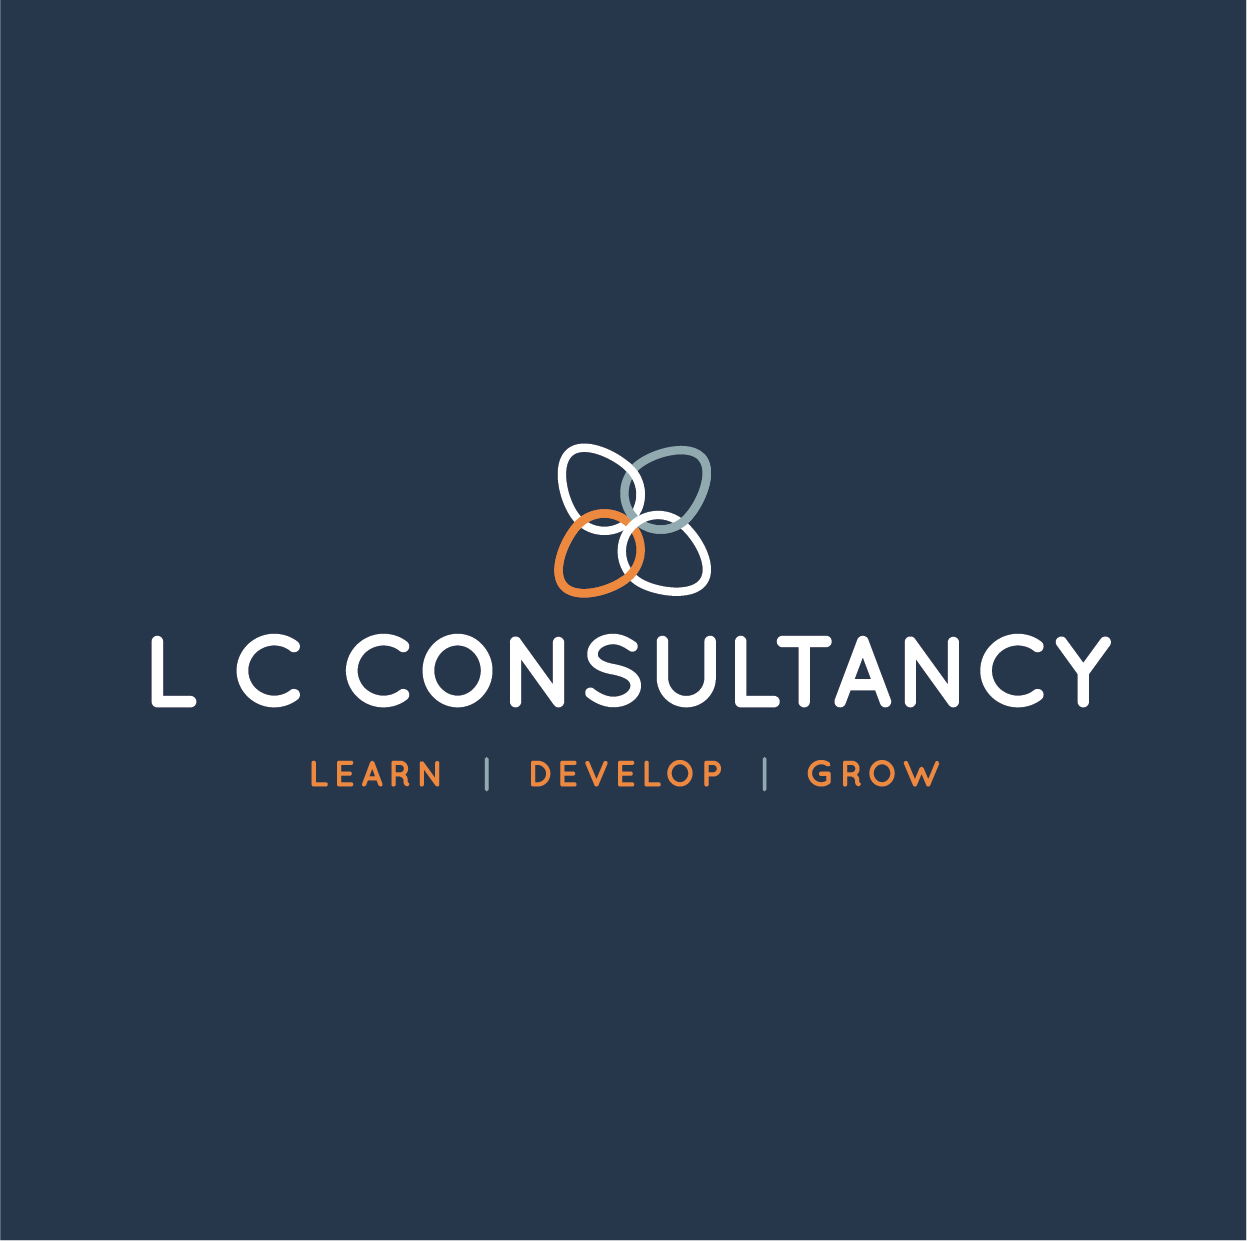 L C C logo square – social media blue